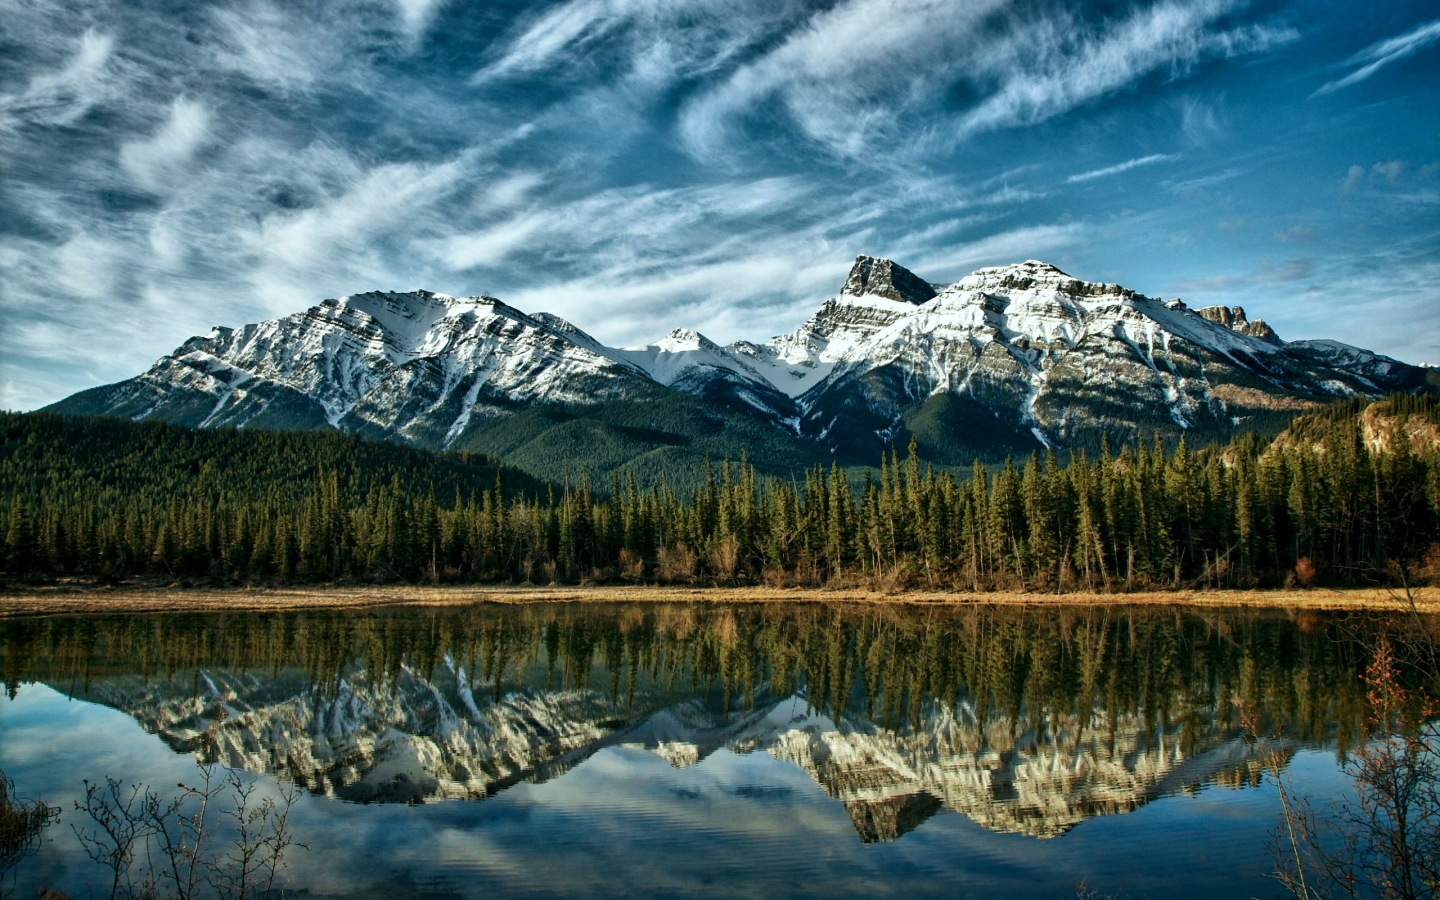 Alberta Mountains Canada for 1440 x 900 widescreen resolution